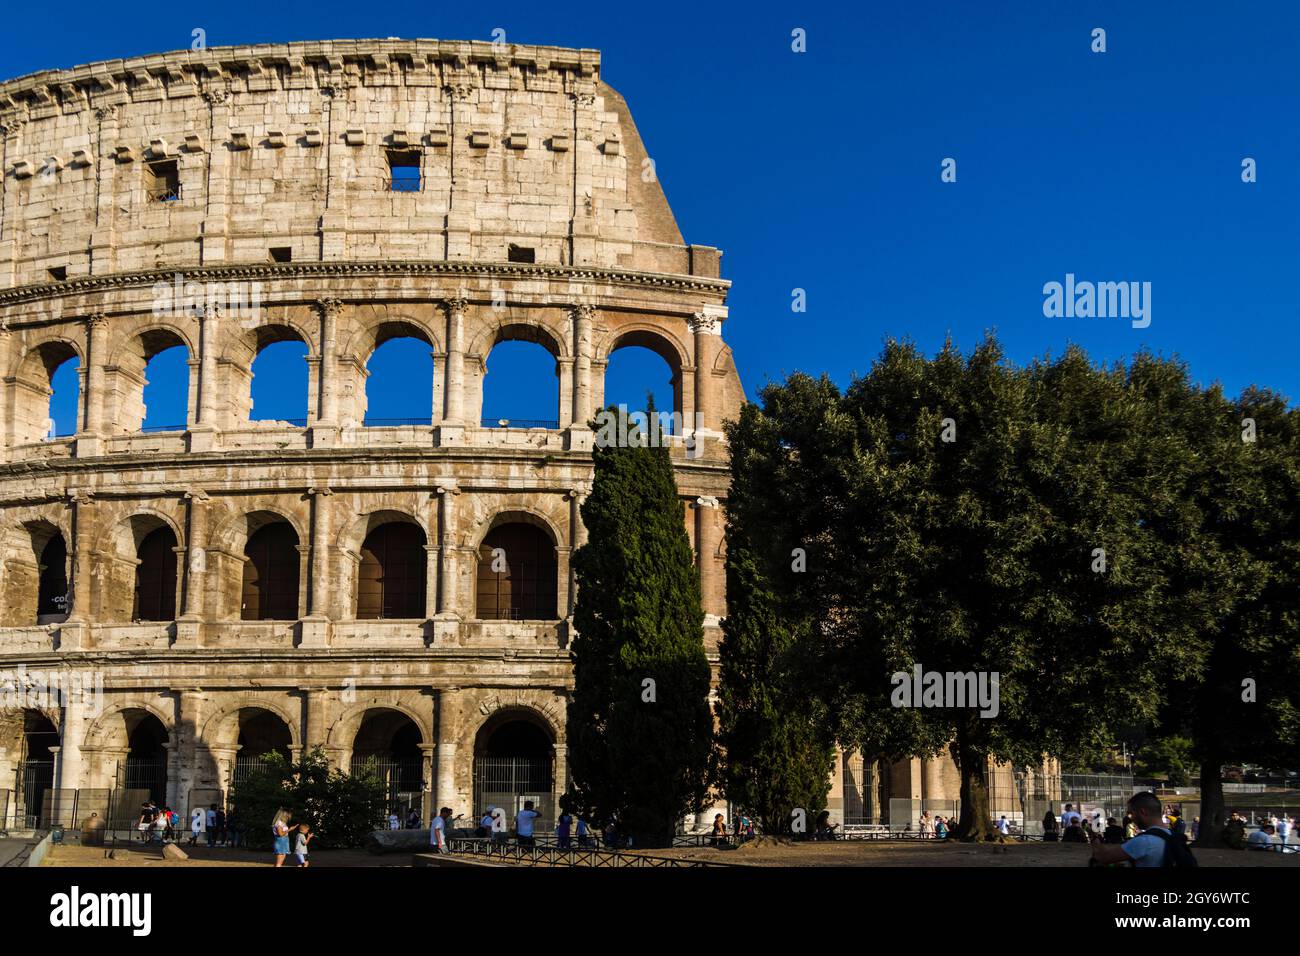 The Colosseum, Rome Stock Photo